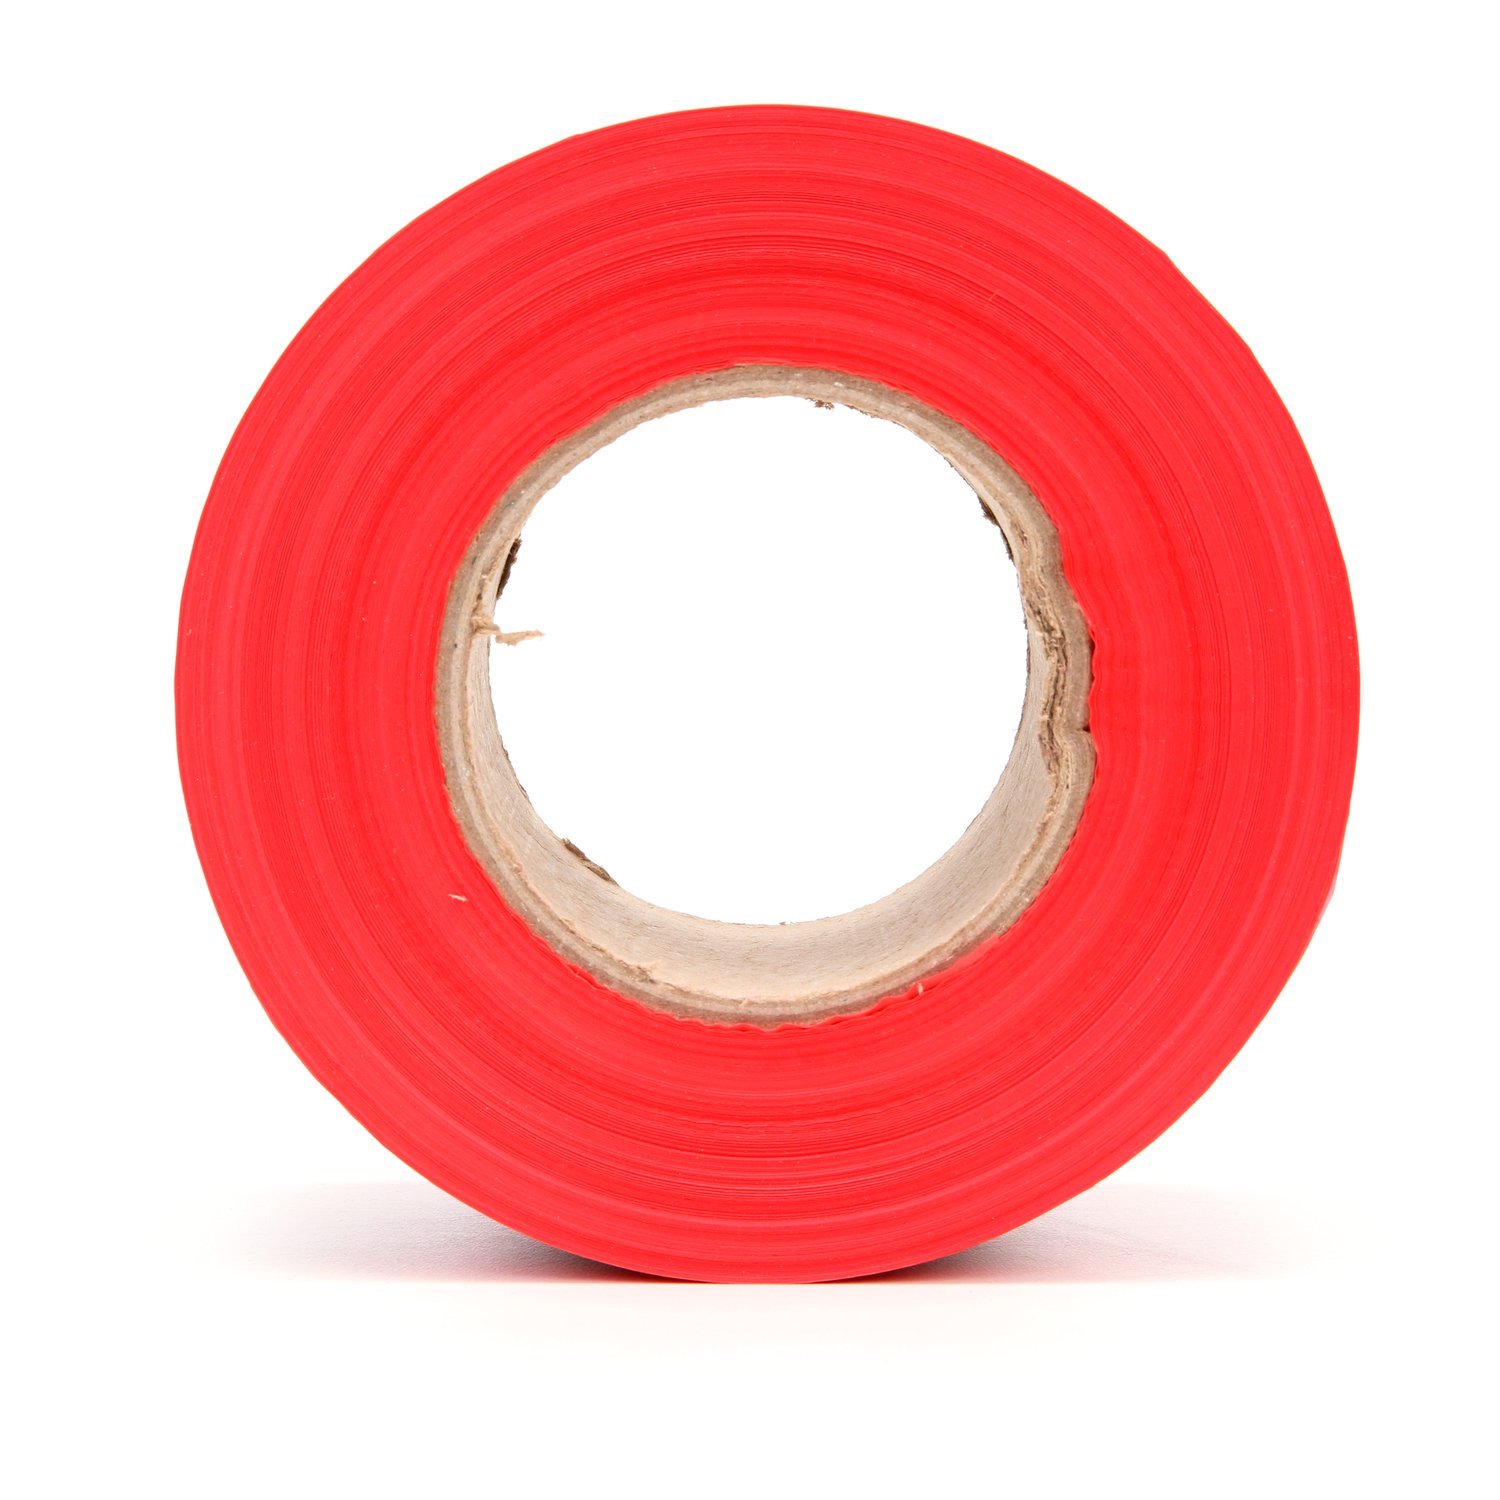 7010349801 - Scotch Barricade Tape 381, DANGER / PELIGRO, 3 in x 1000 ft, Red, 8
rolls/Case